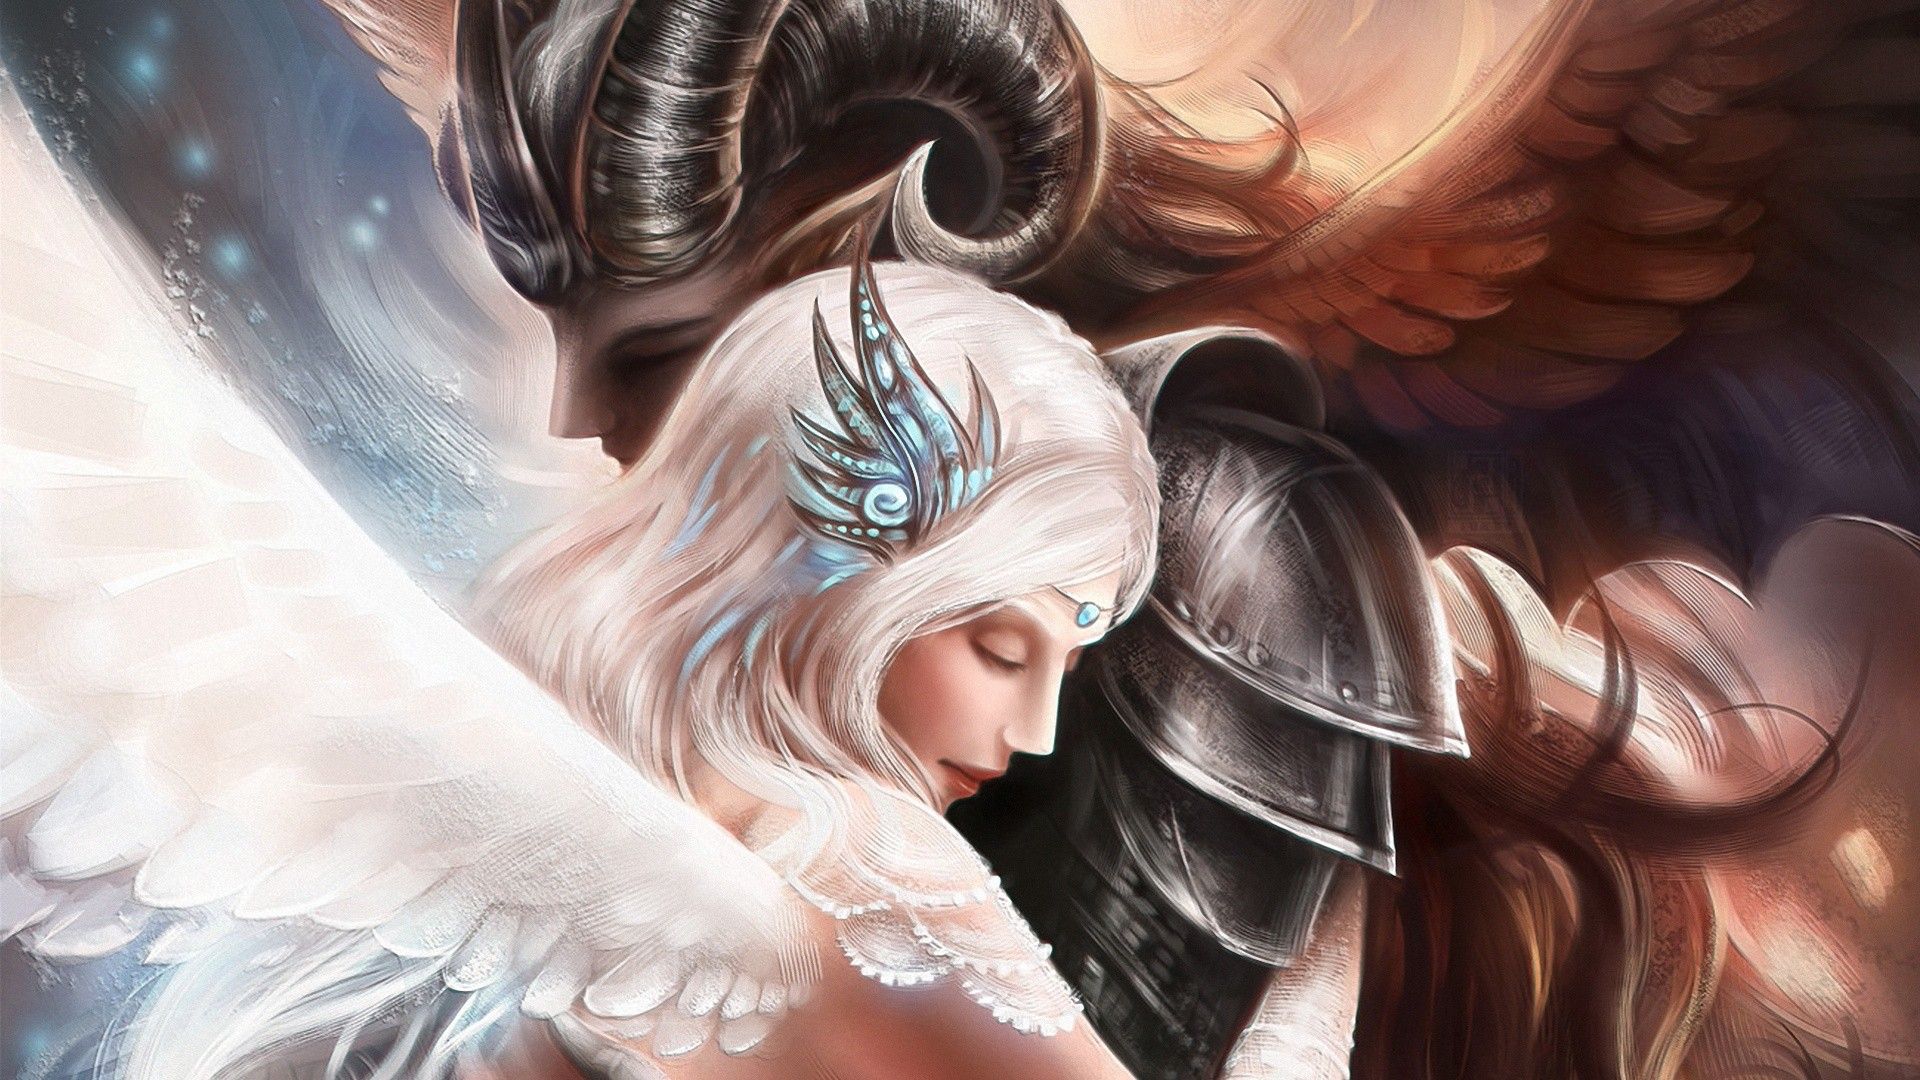 Wallpaper Angels And Demons Wallpaper And Demons Fantasy Art HD Wallpaper